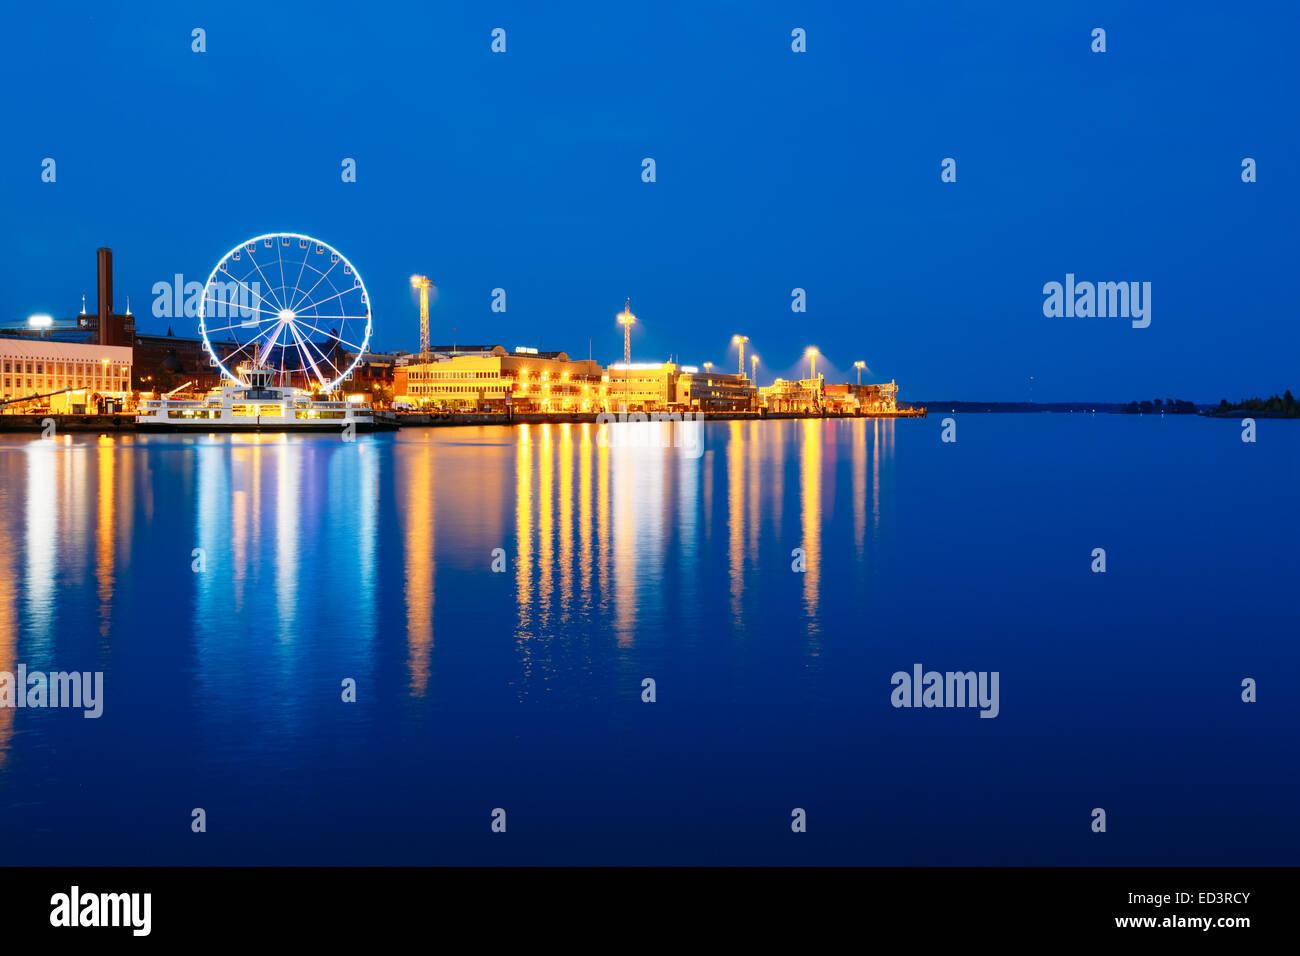 Night Scenery Panoramic View Of Embankment With Ferris Wheel In Helsinki, Finland Stock Photo